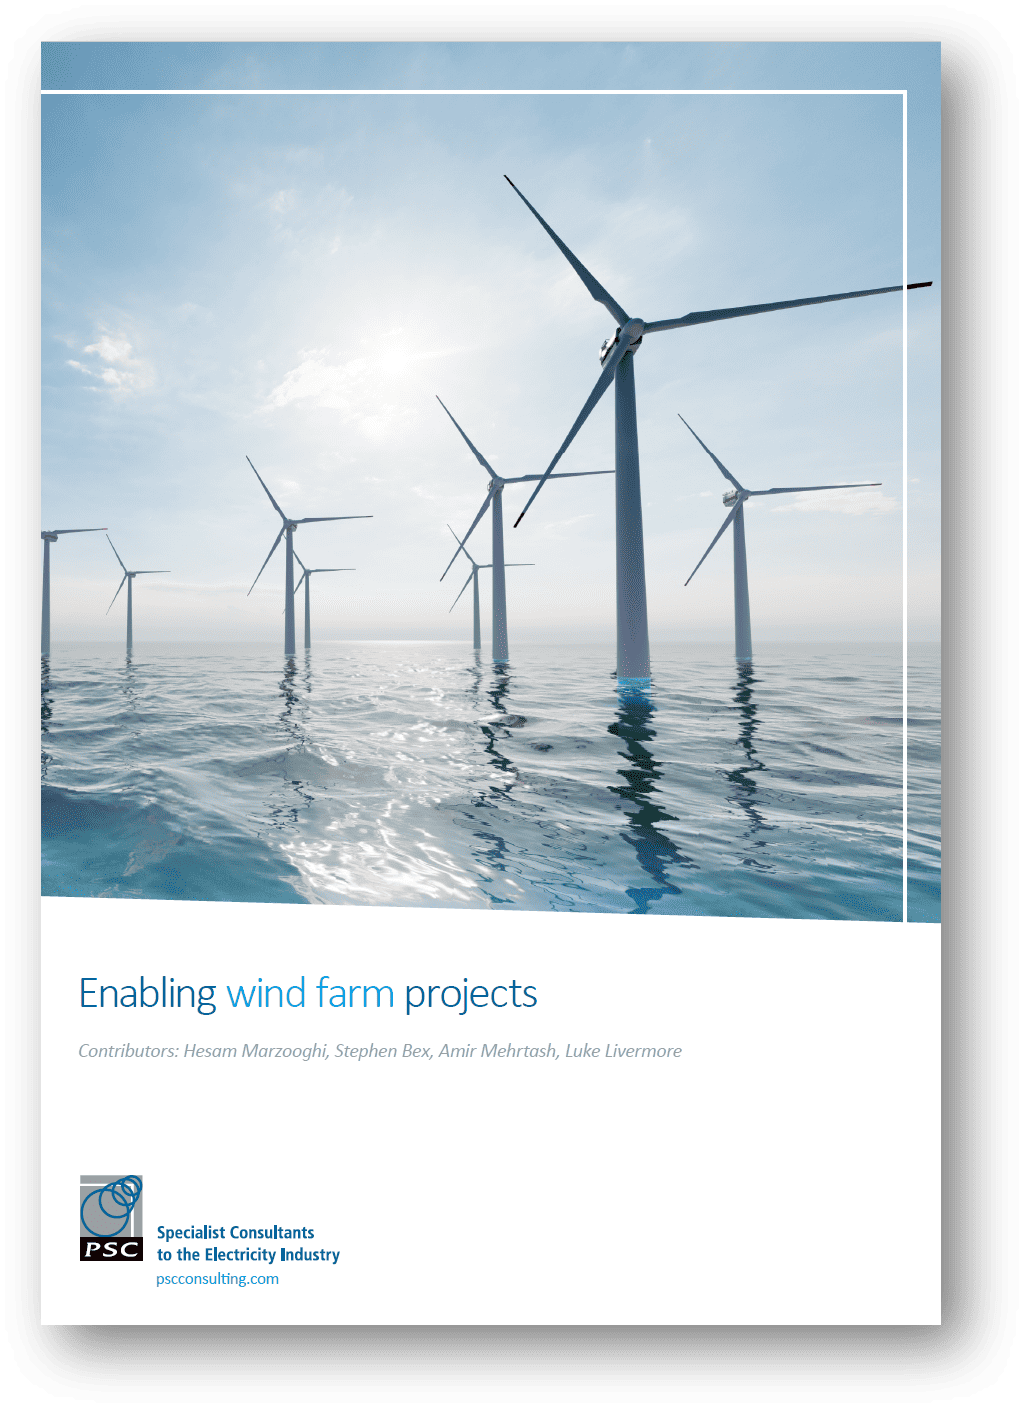 Enabling wind projects